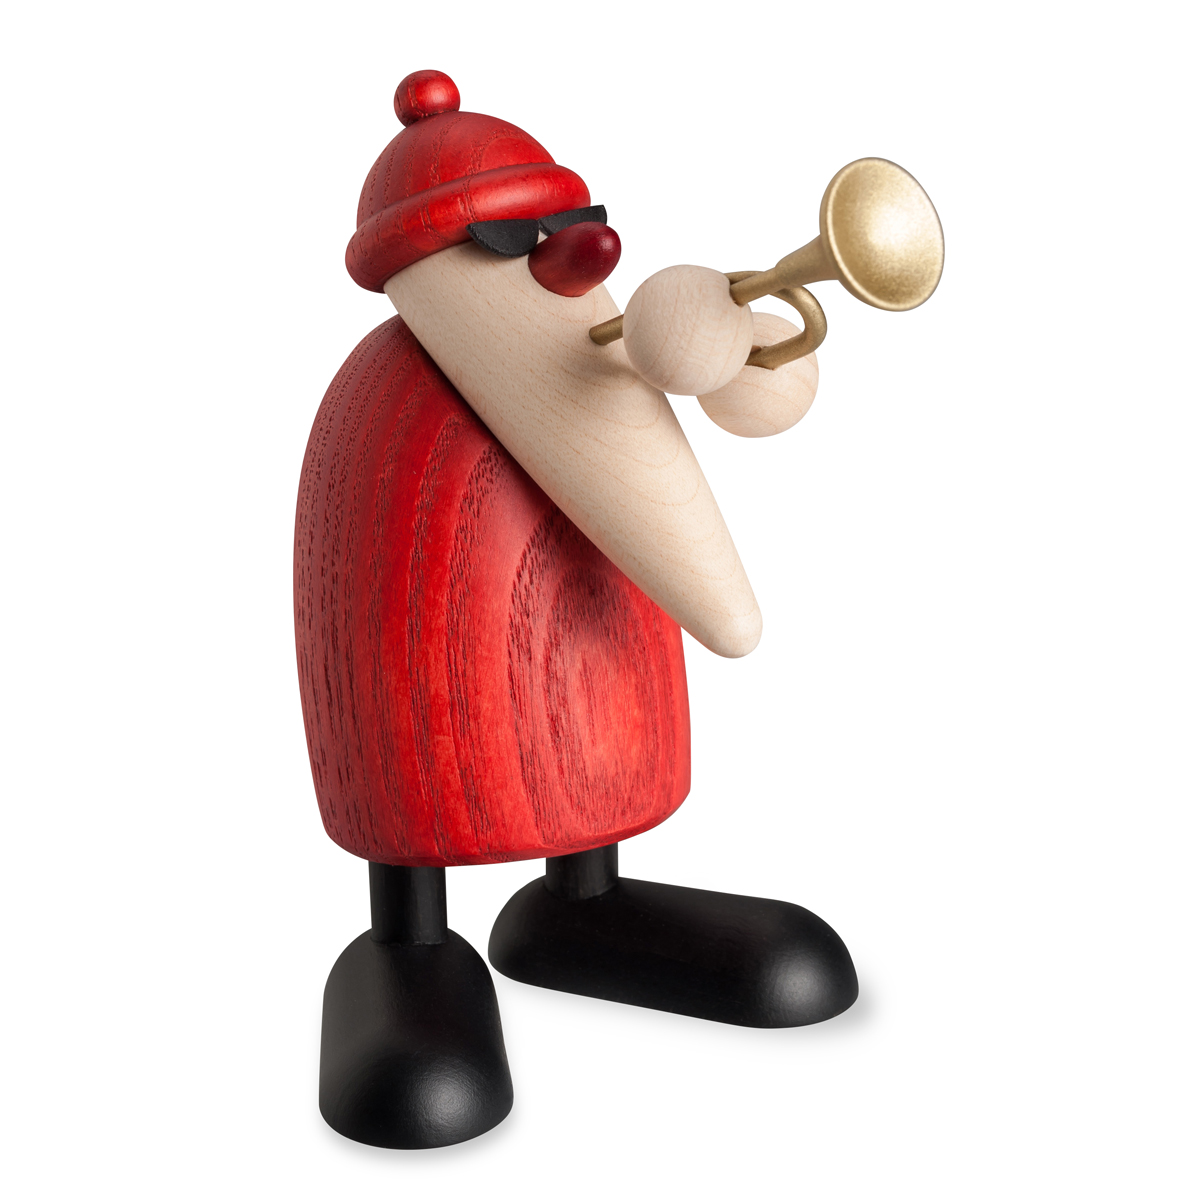 Santa Claus playing the trumpet